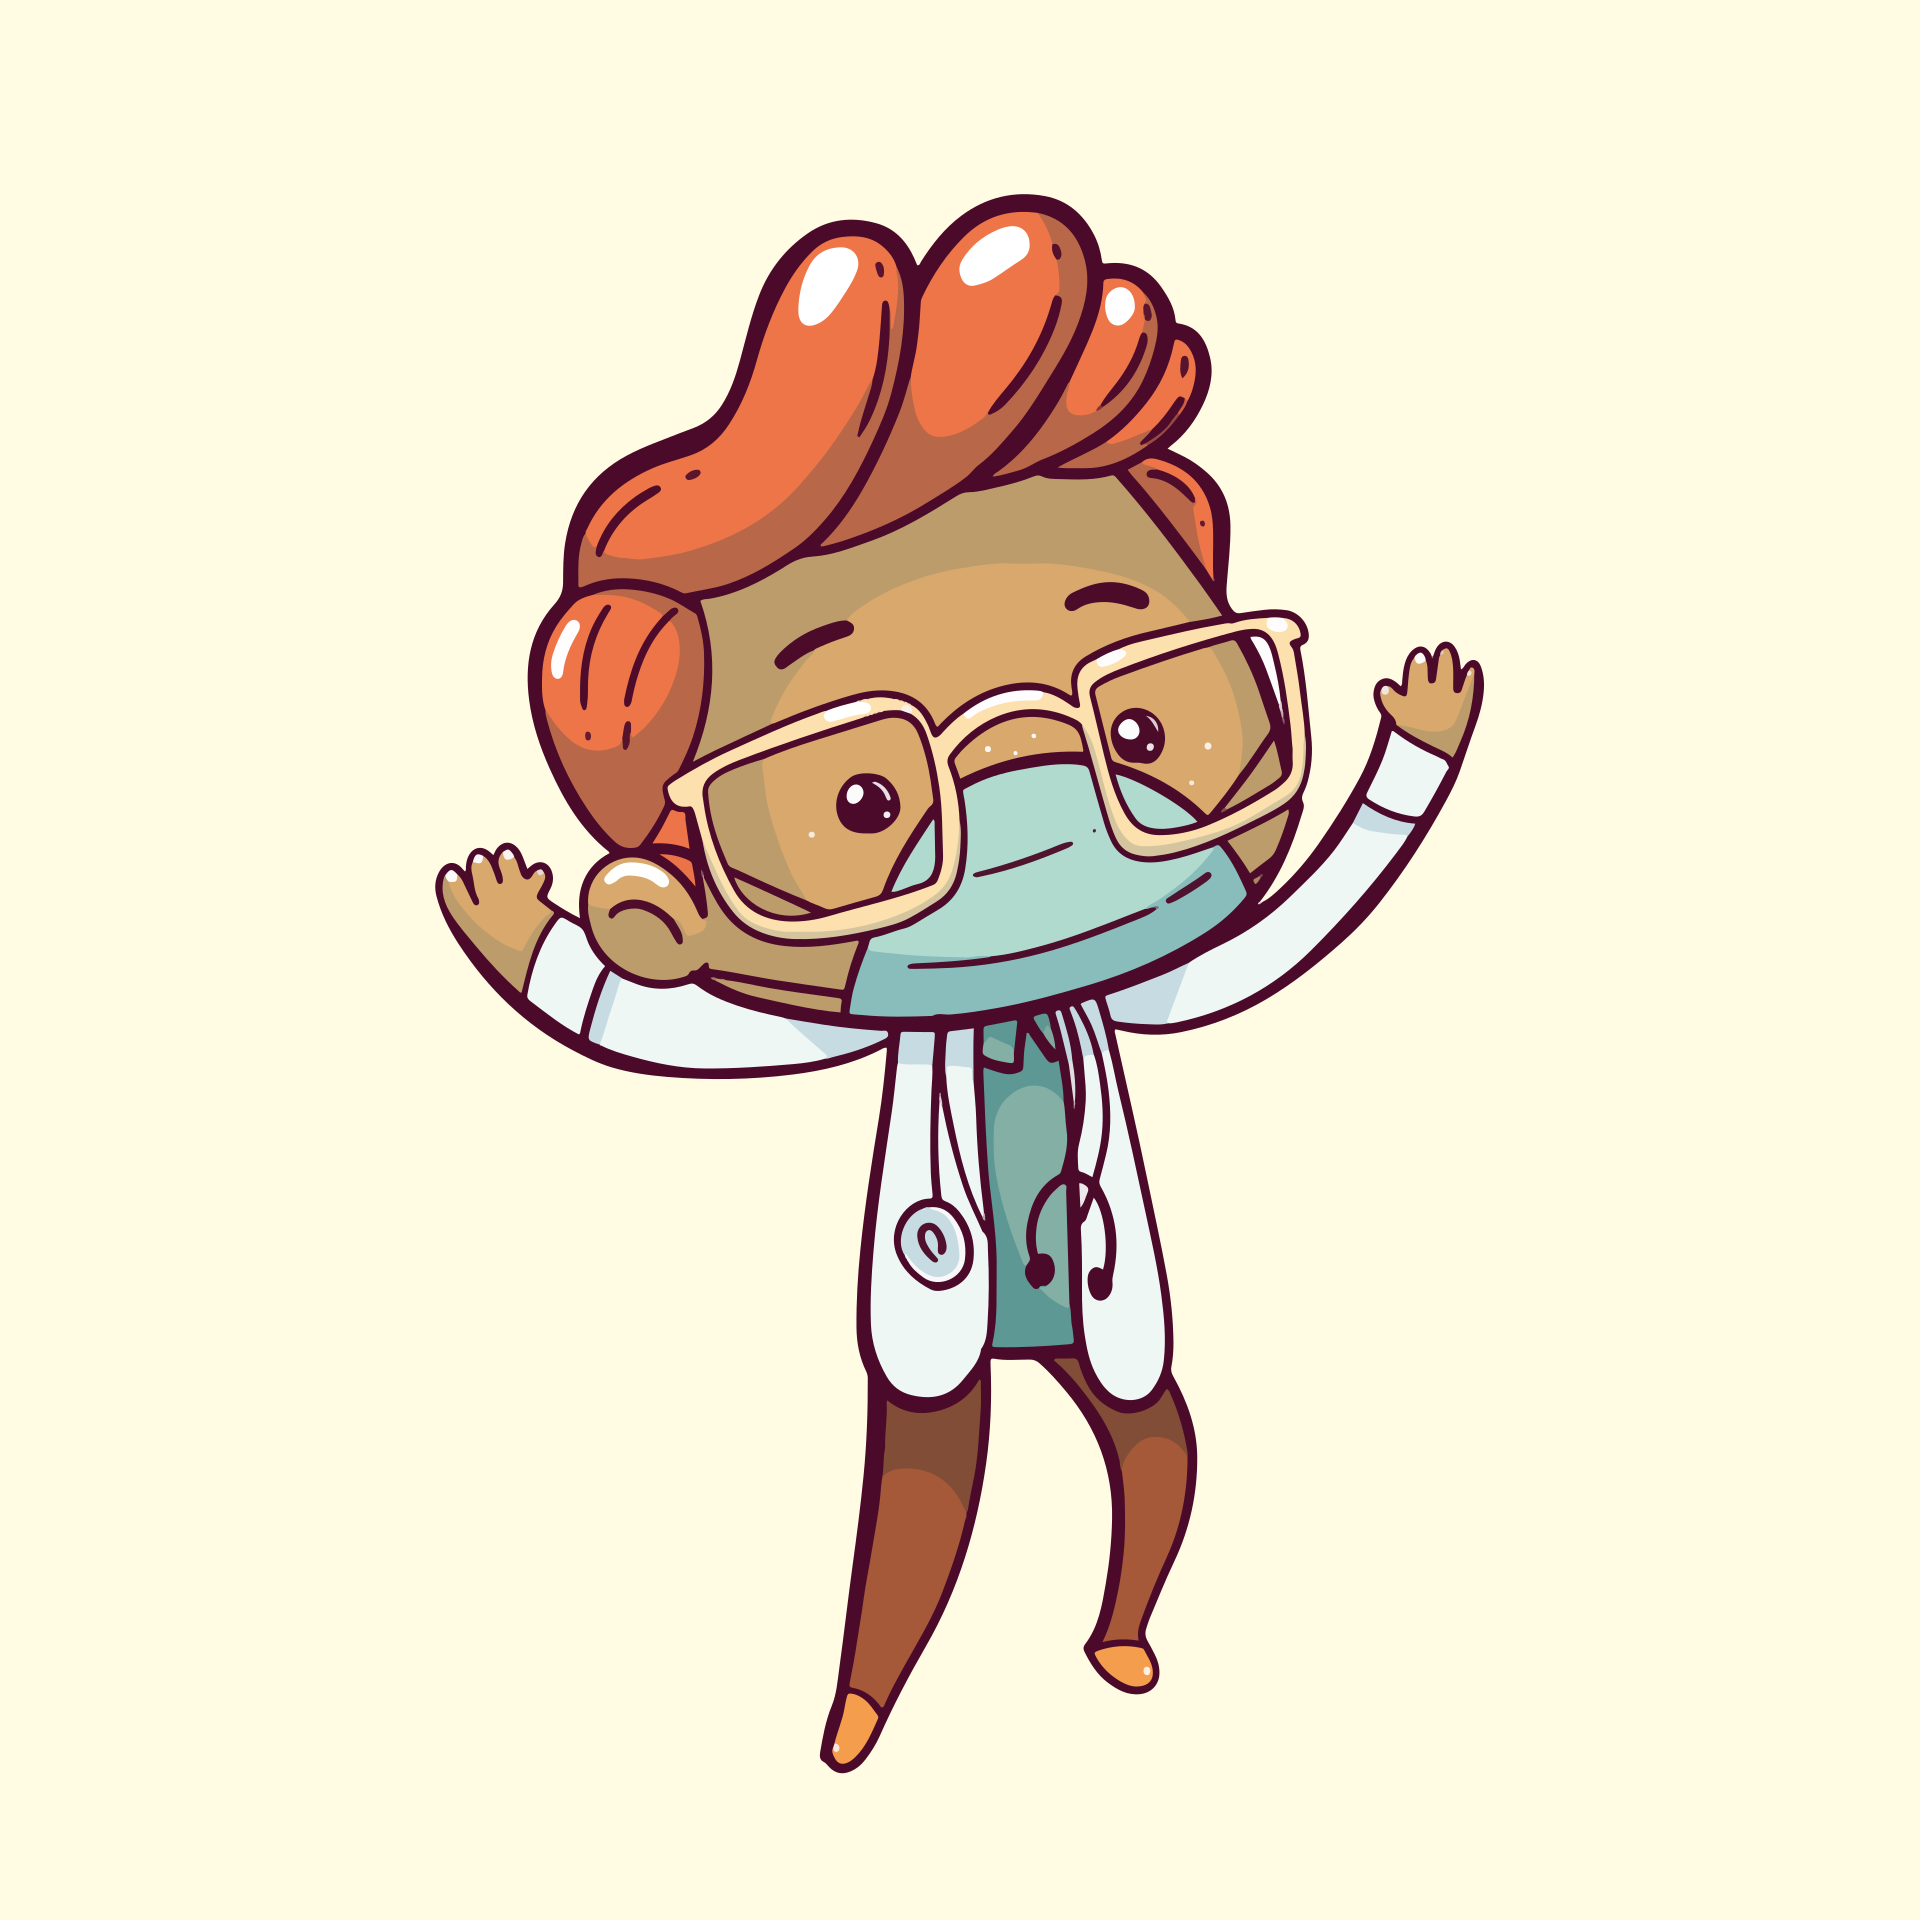 Cartoon image of a doctor